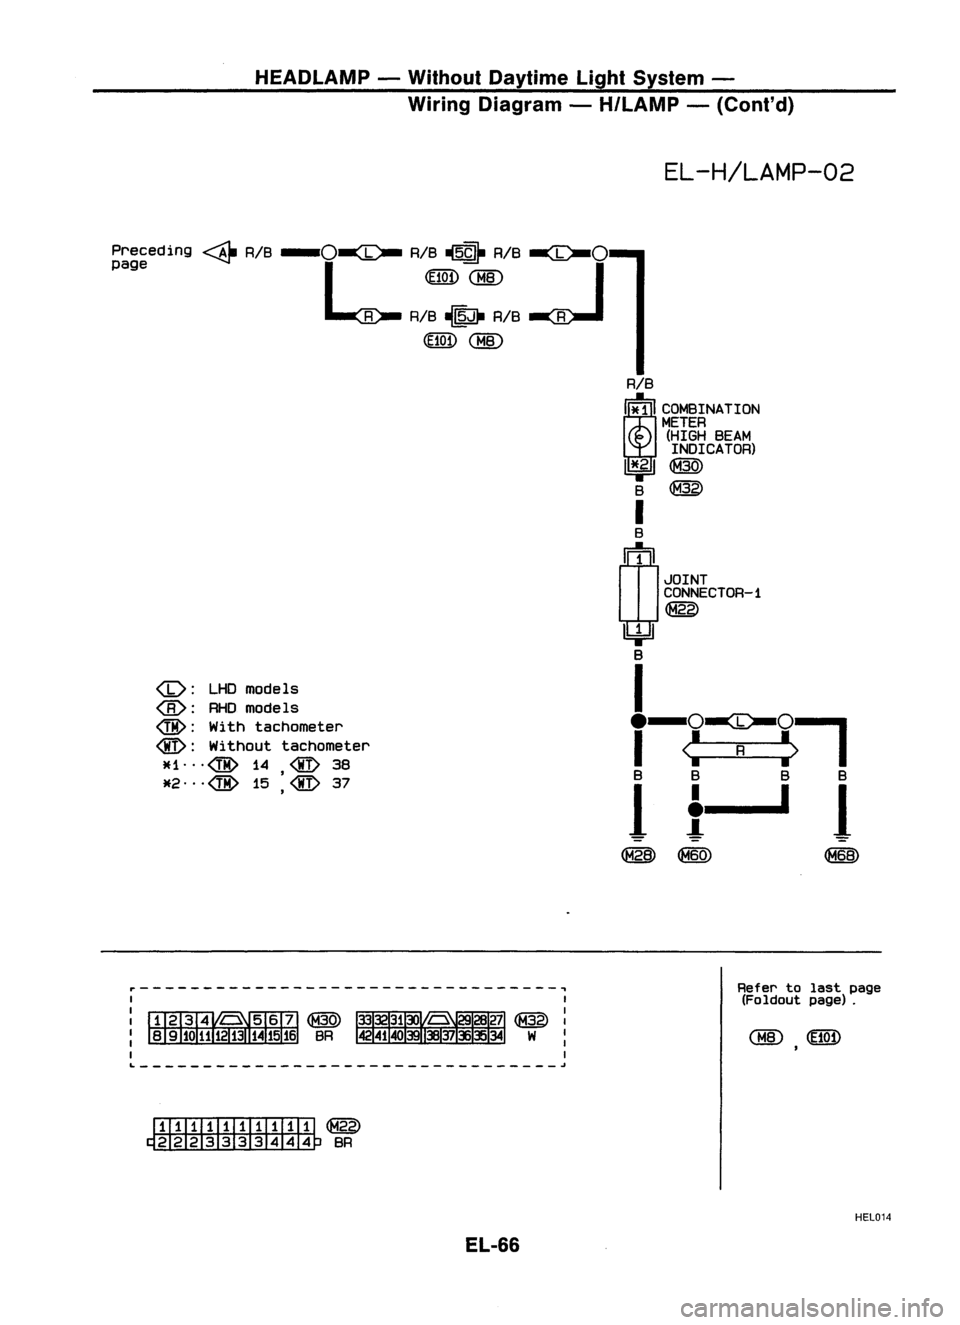 NISSAN ALMERA N15 1995  Service Manual HEADLAMP-Without Daytime LightSystem -
Wiring Diagram -H/LAMP -(Cont'd)

EL-H/LAMP-02

Preceding ~RIB
-o~ 
RIB~ RIB
~o

page L.~

<illD

<:BID

R RIB~ RIB R

(HOf) 
<:BID

<I>: 
LHDmodels

@: 
RHO